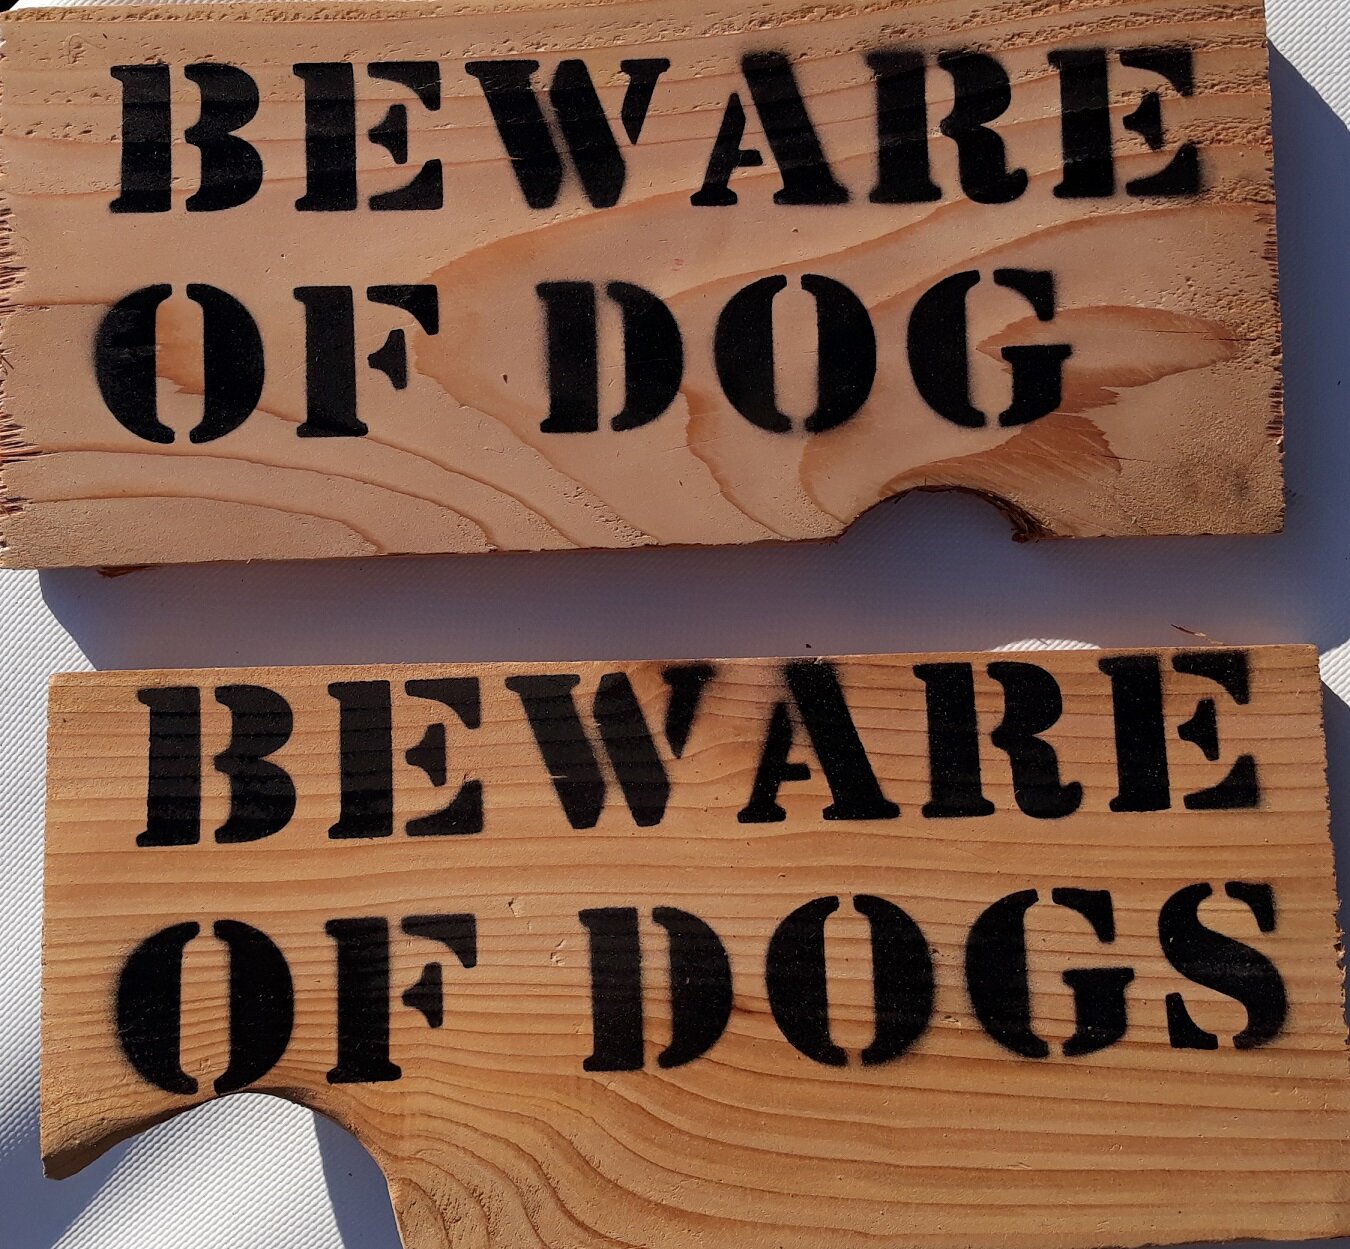 beware dog.jpg